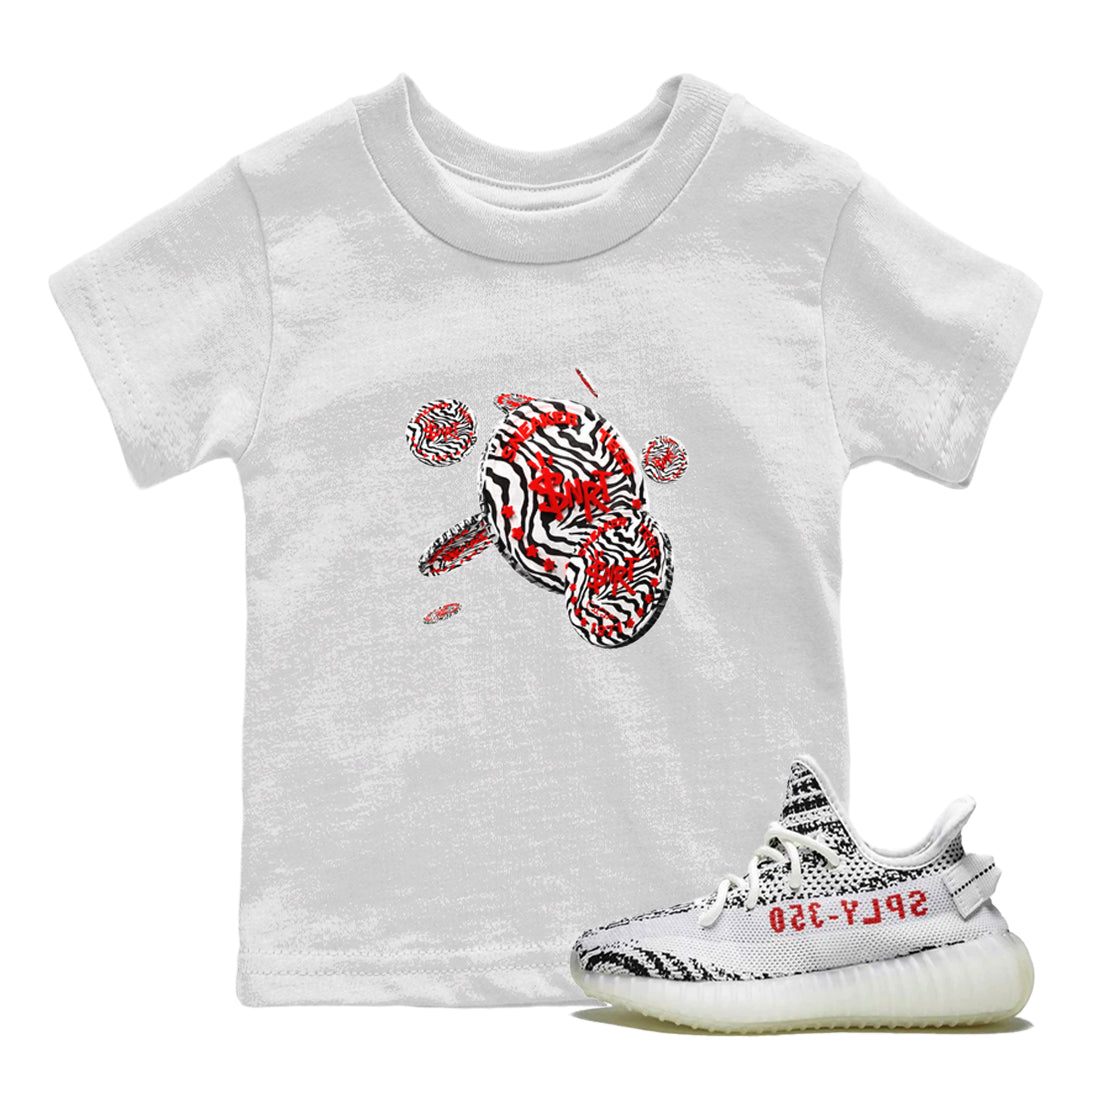 Yeezy 350 Zebra Sneaker Match Tees Coin Drop Sneaker Tees Yeezy Boost 350 V2 Zebra Sneaker Release Tees Kids Shirts White 1